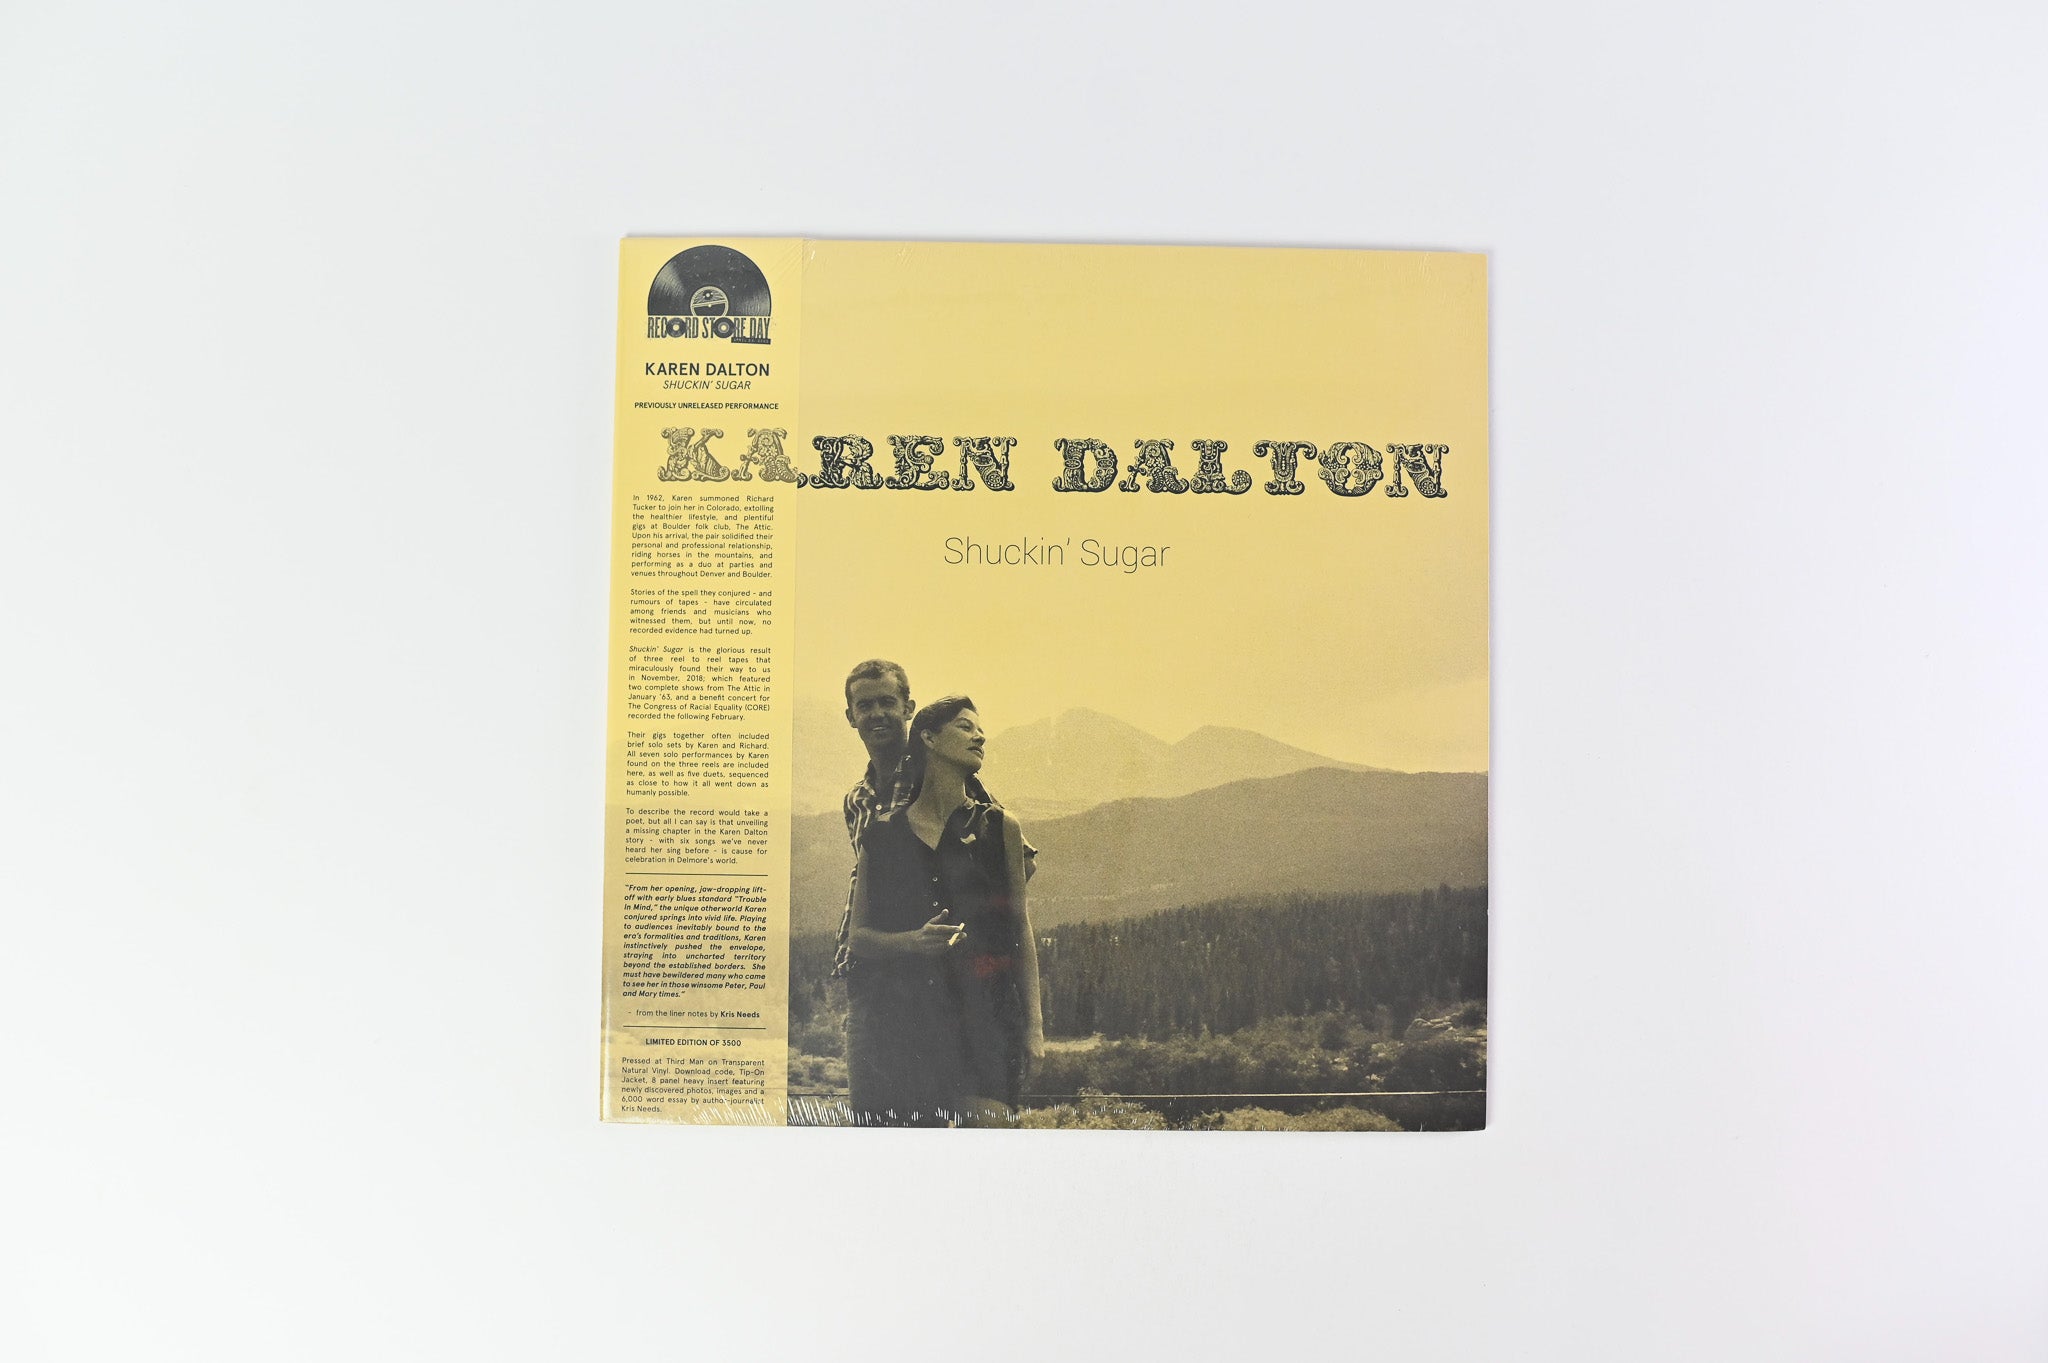 Karen Dalton - Shuckin' Sugar on Delmore Ltd RSD Clear Vinyl Sealed